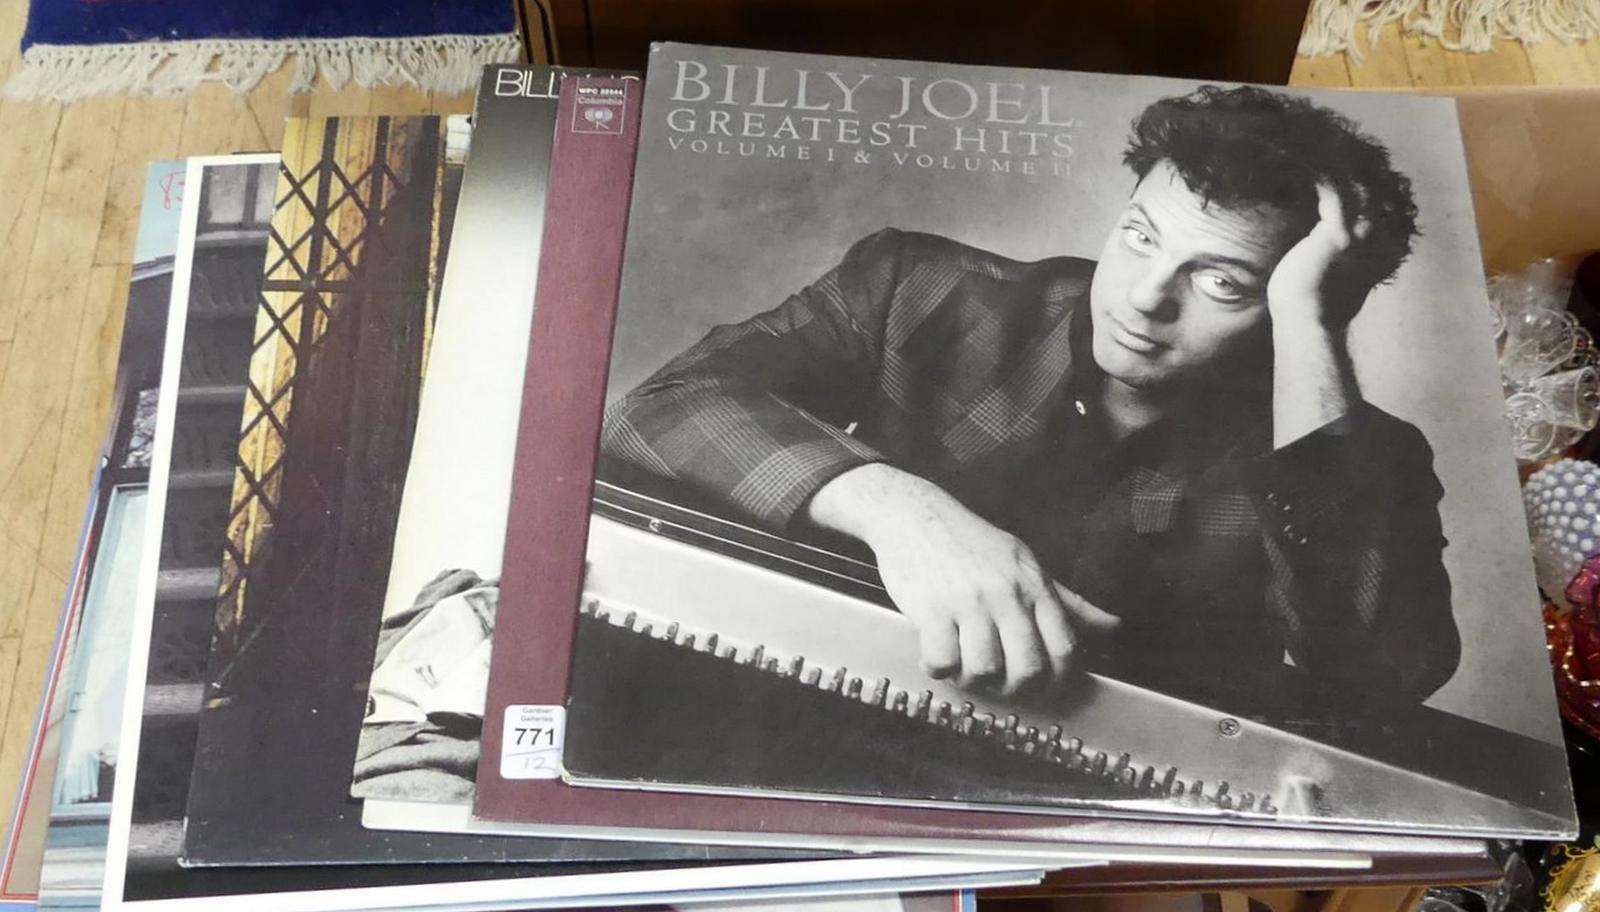 BILLY JOEL AND ELTON JOHN RECORDS